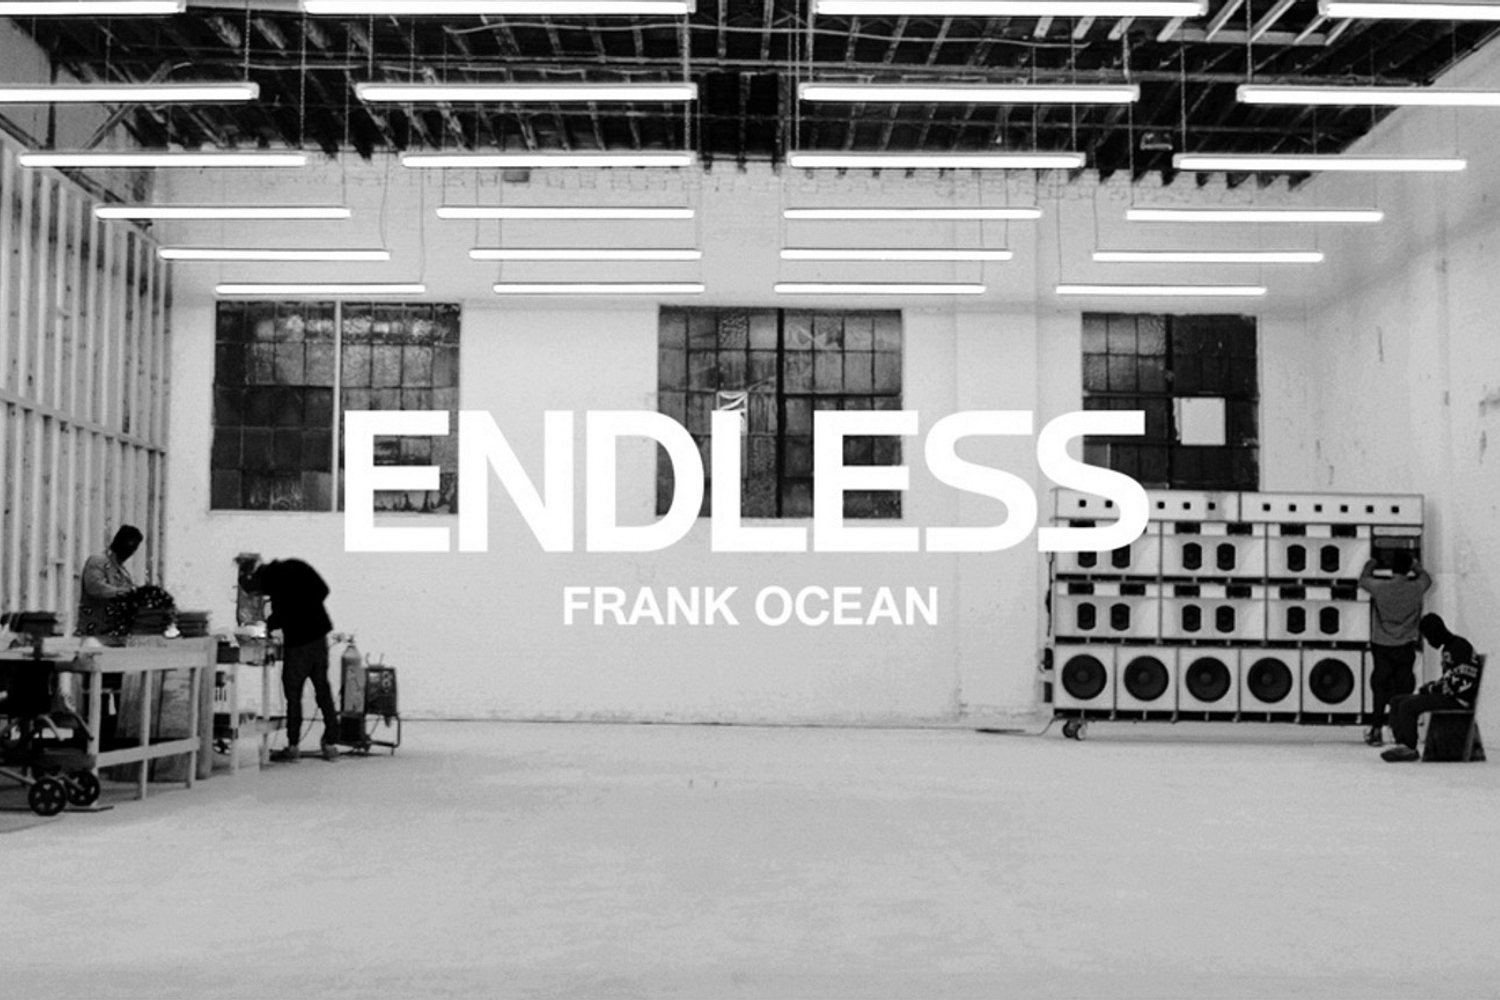 Frank Ocean’s ‘Endless’ vinyl has finally arrived